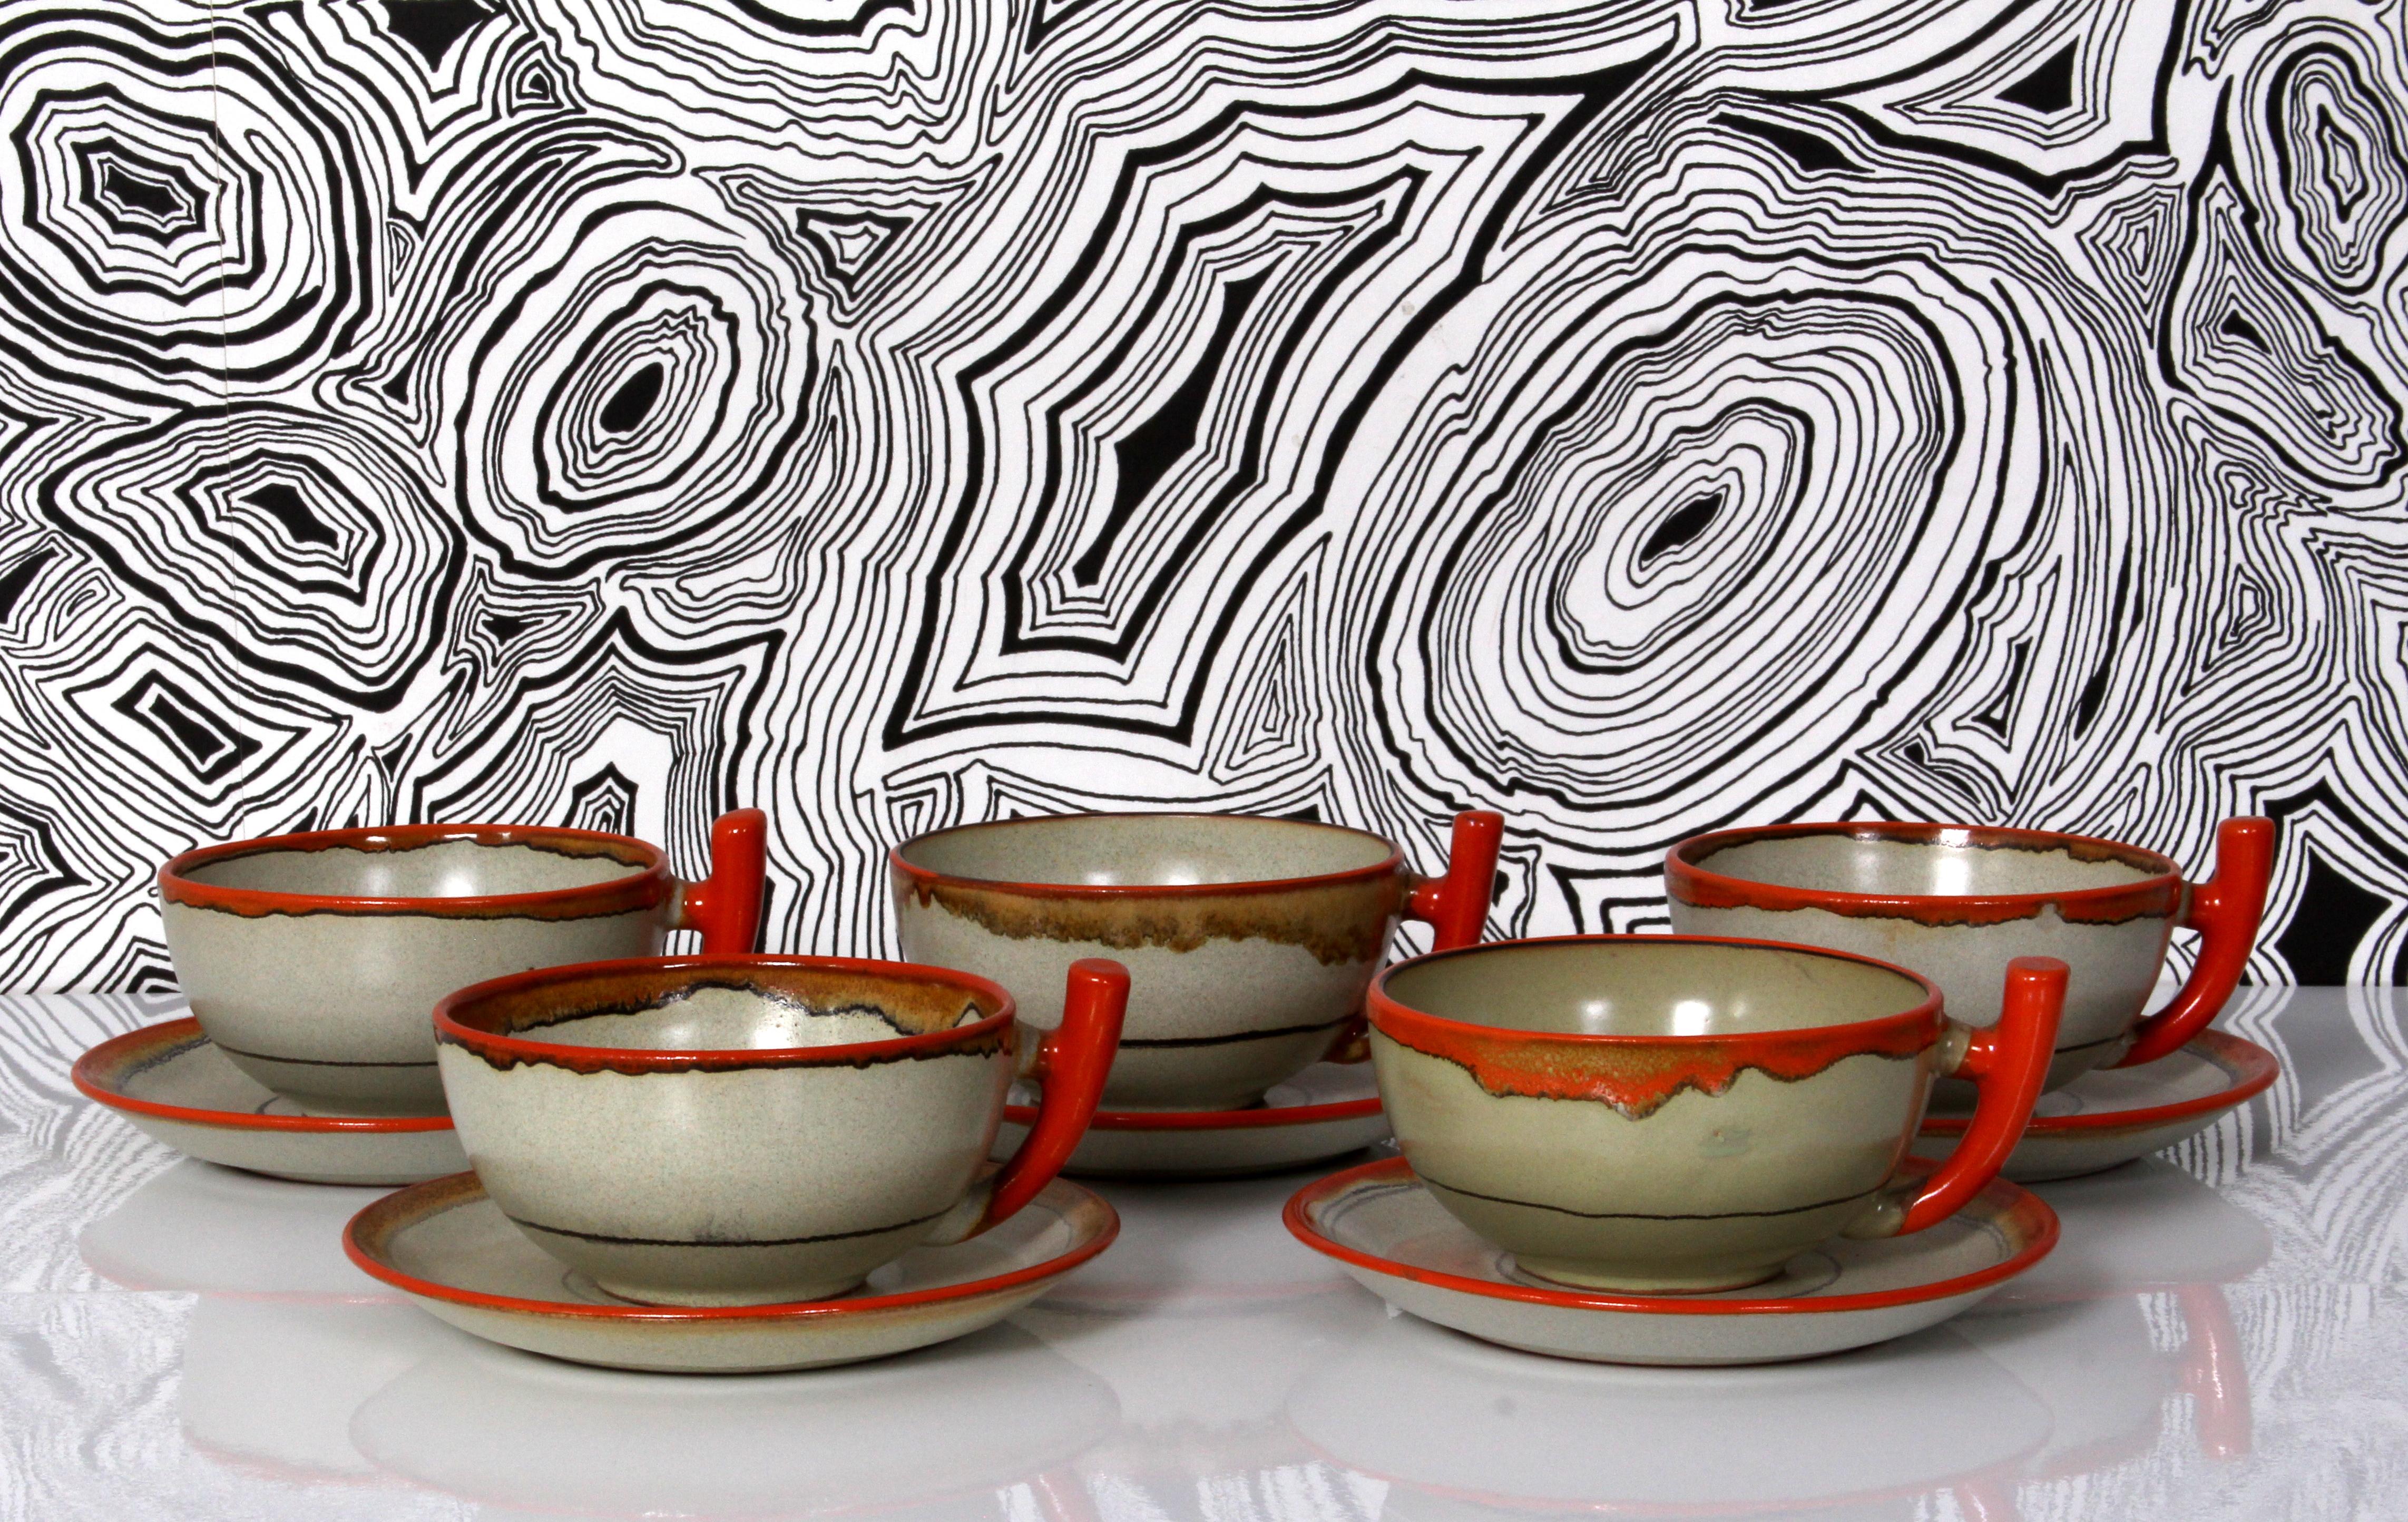 Art Deco Tea Service by Carstens Uffrecht ar 1930 uranium glaze + cups + plates  For Sale 1